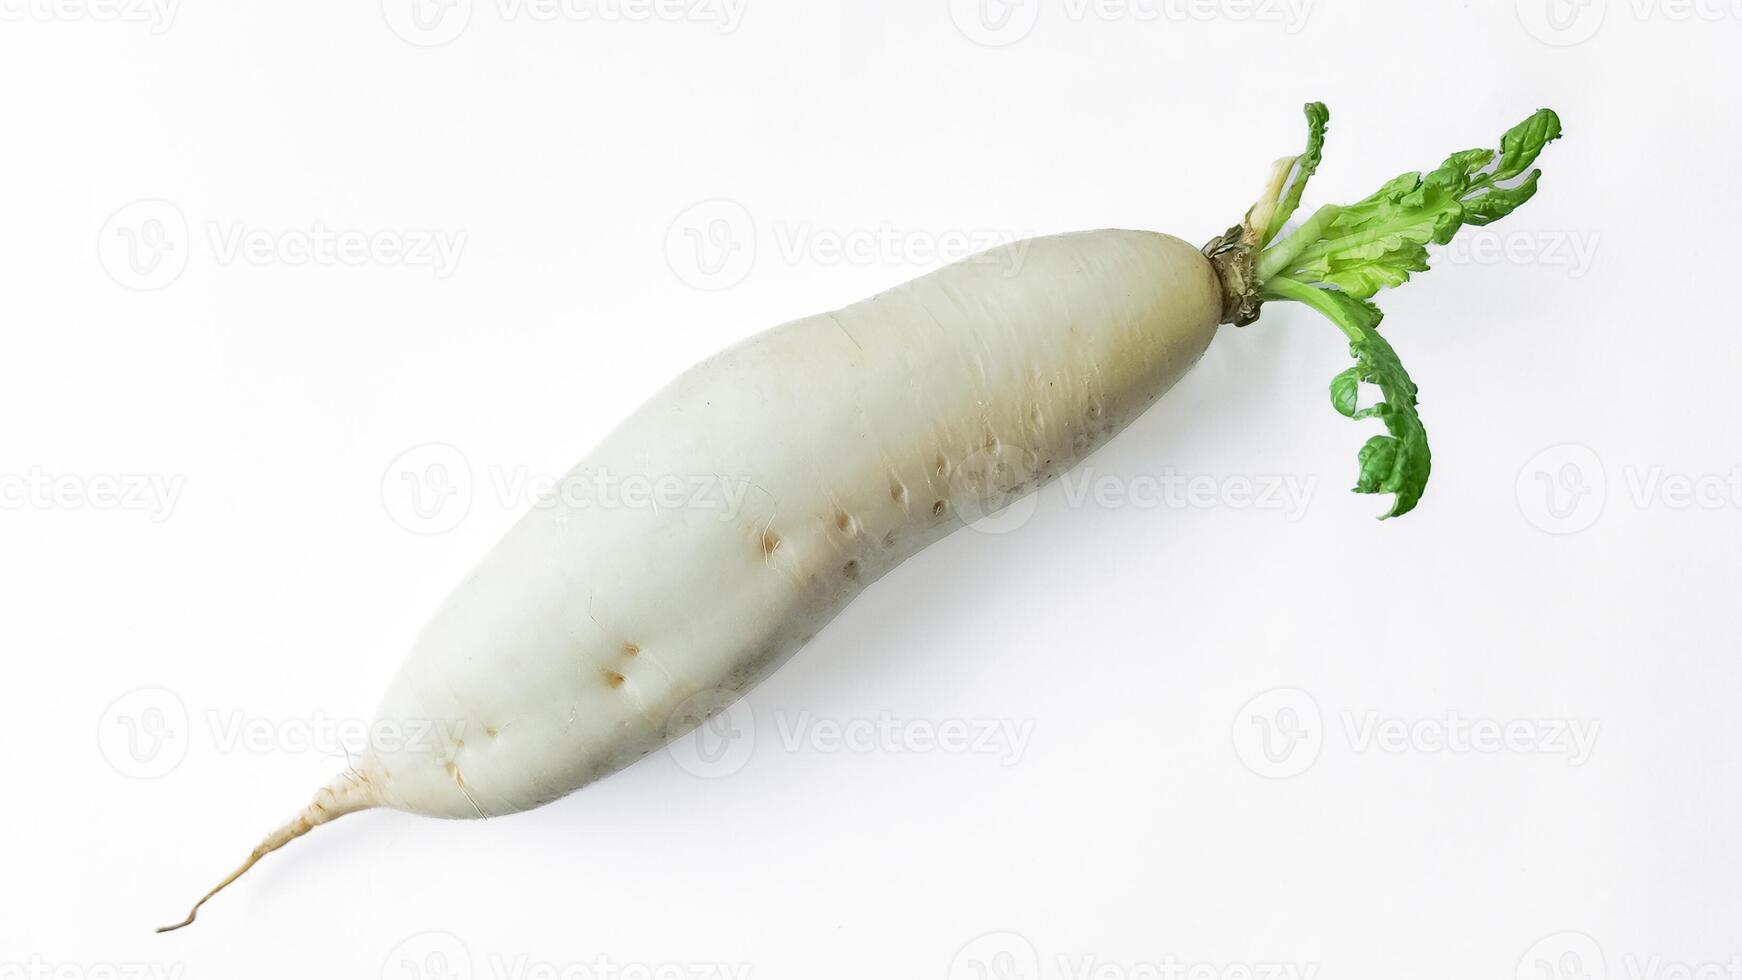 culinaire blanc daikon un radis sur blanc Contexte photo